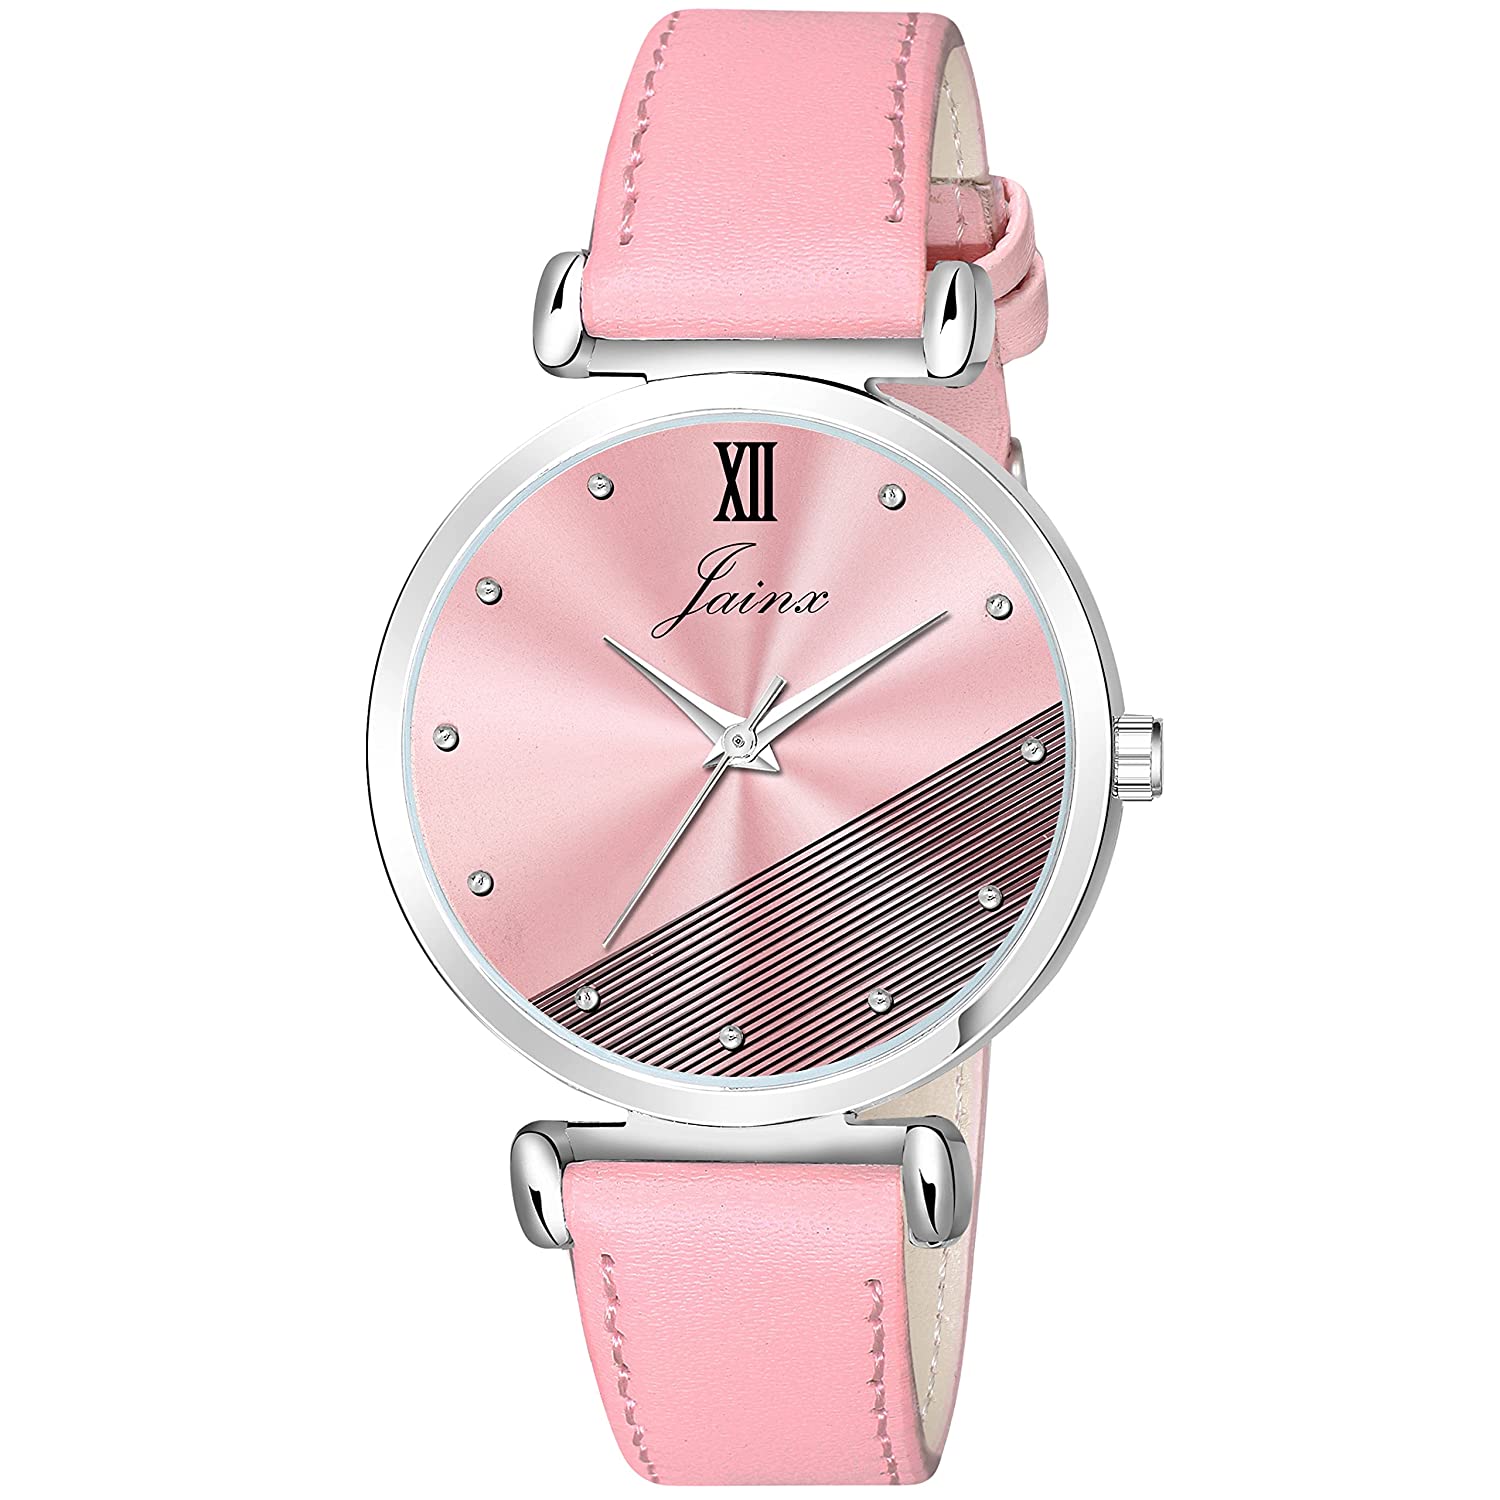 Pink Leatherette Strap Analog Watch - For Women JW8517 - Jainx Store